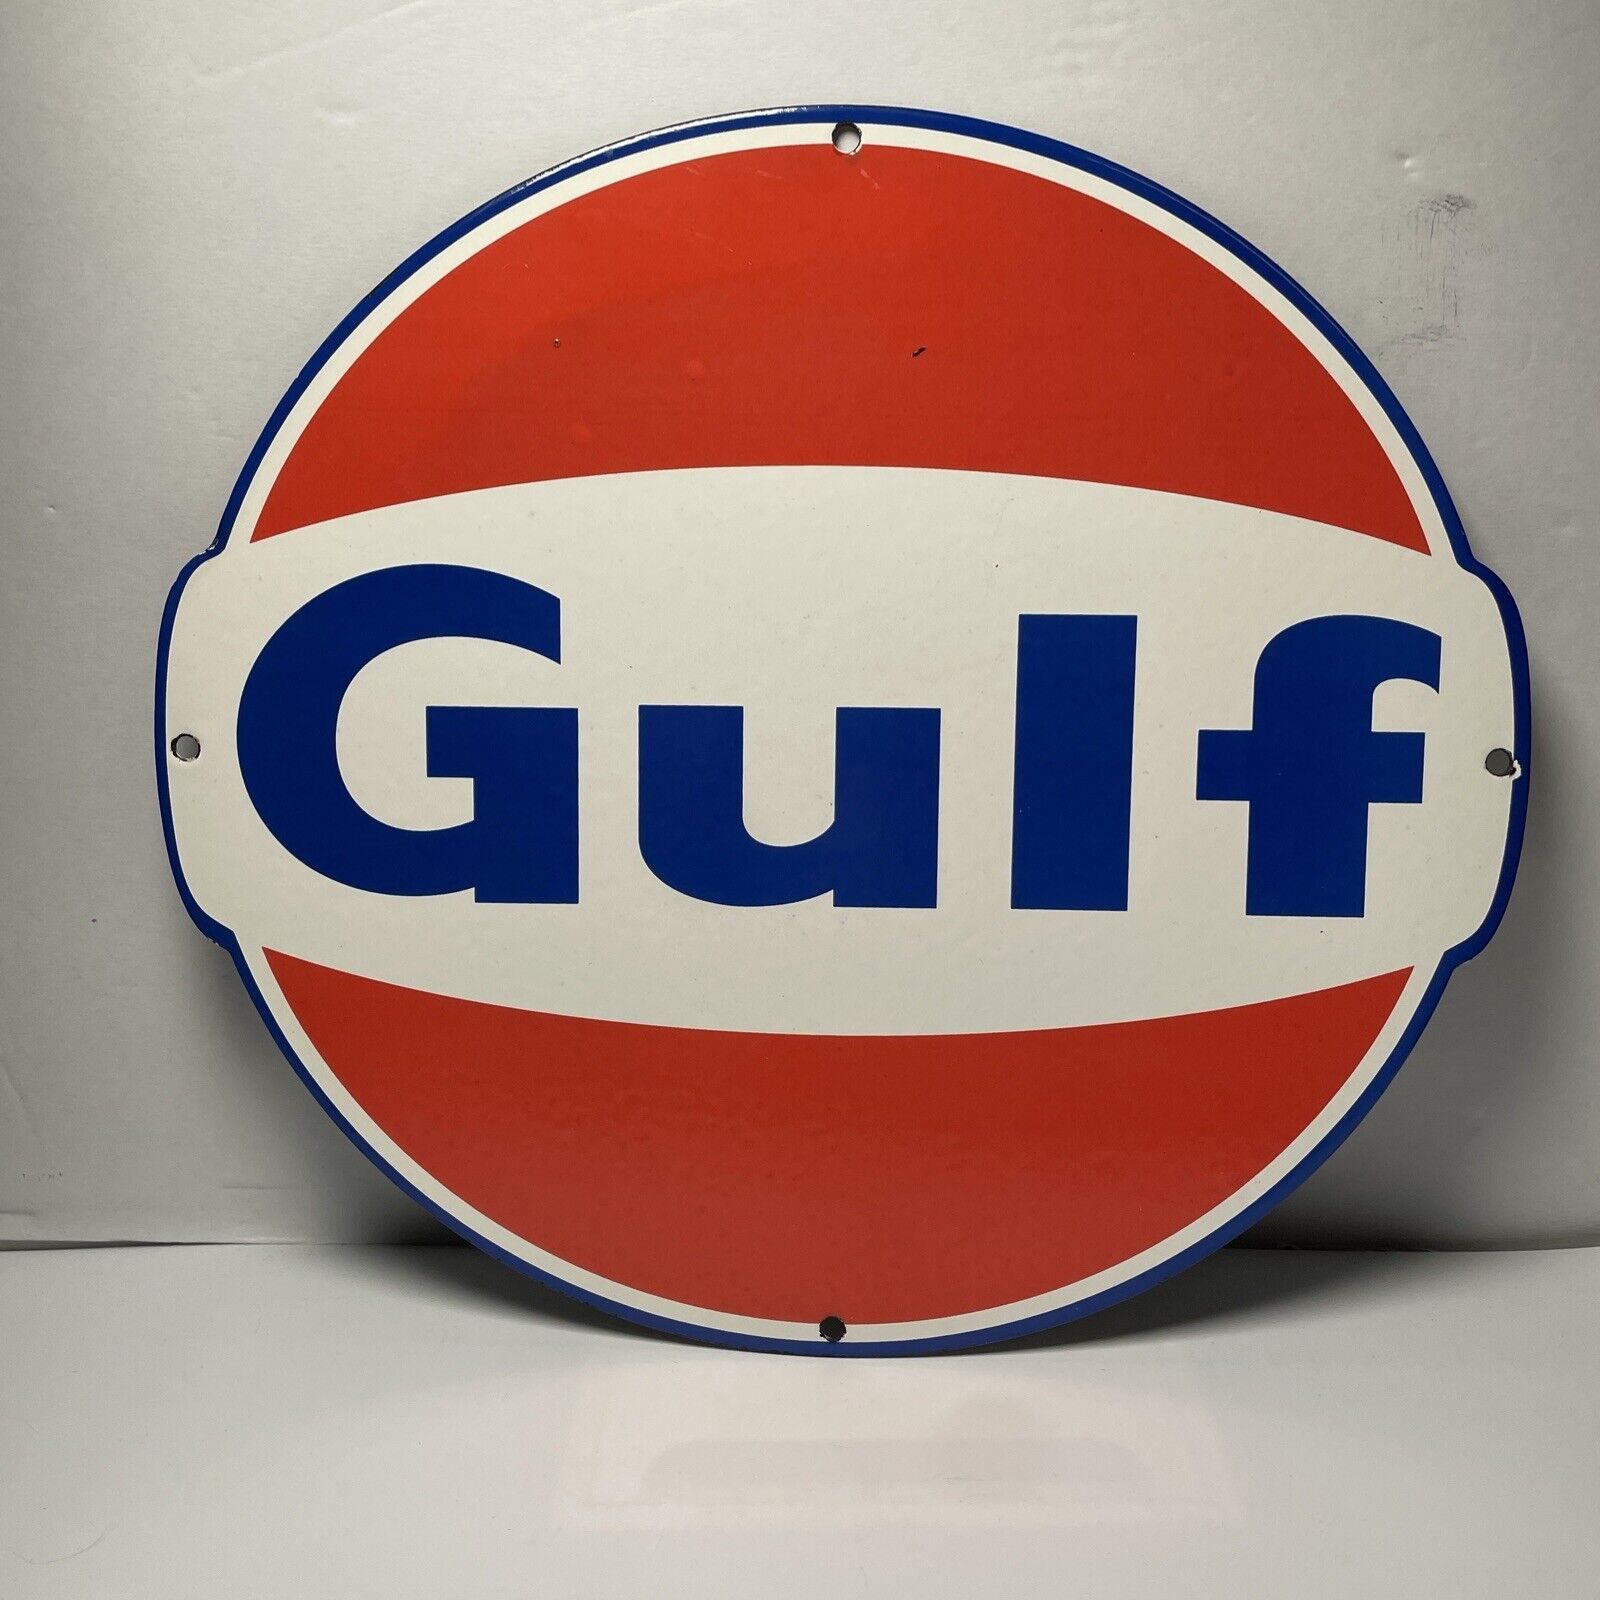 GULF Gasoline Metal Porcelain Gas Station Sign (approximately 13”x14”) Vintage